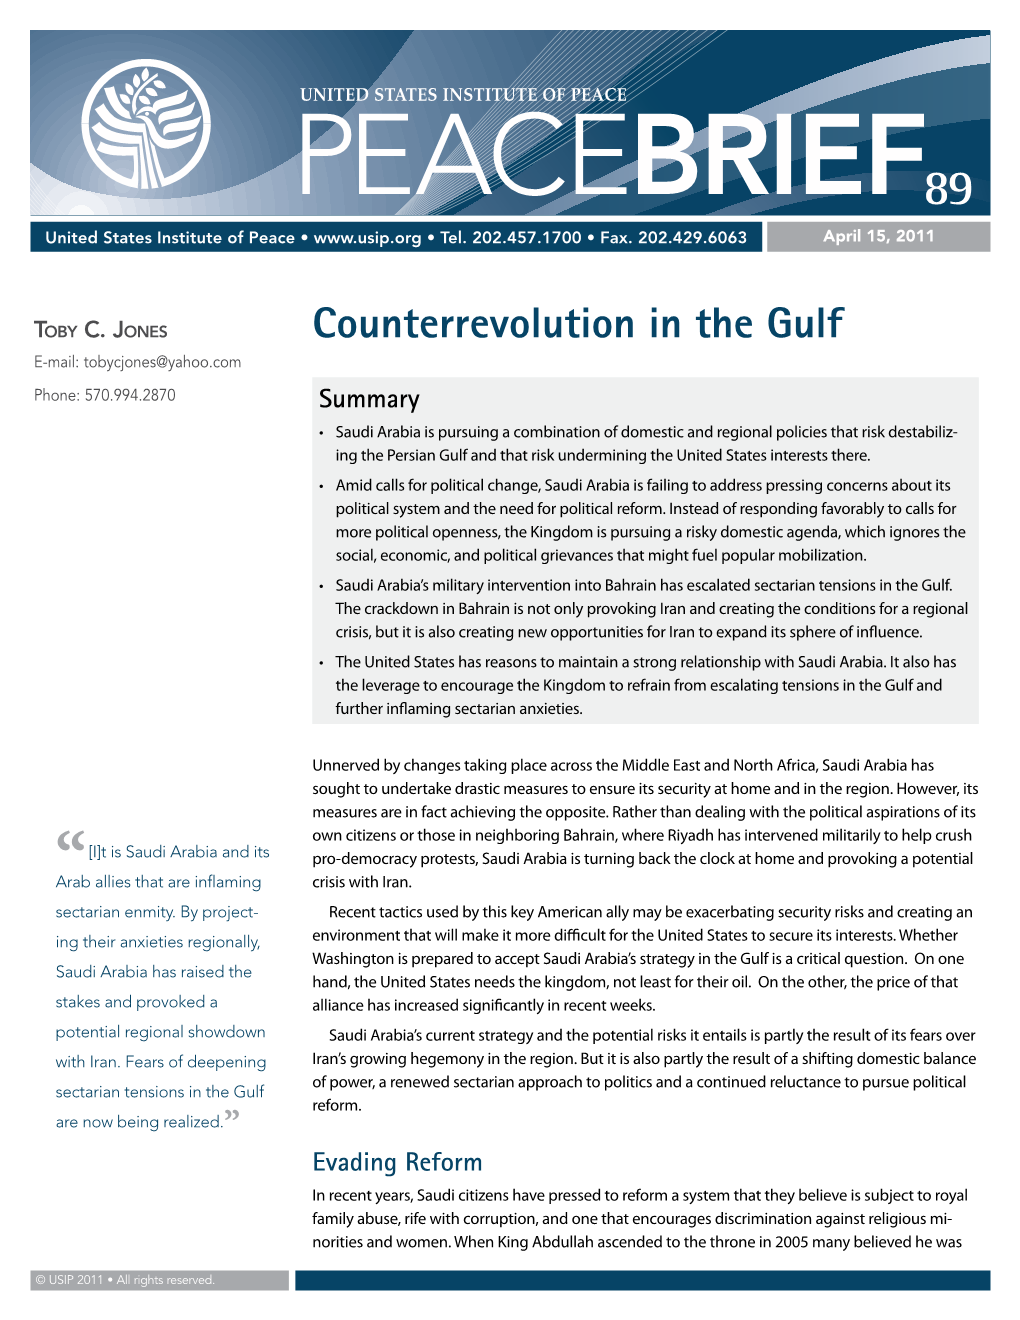 Counterrevolution in the Gulf